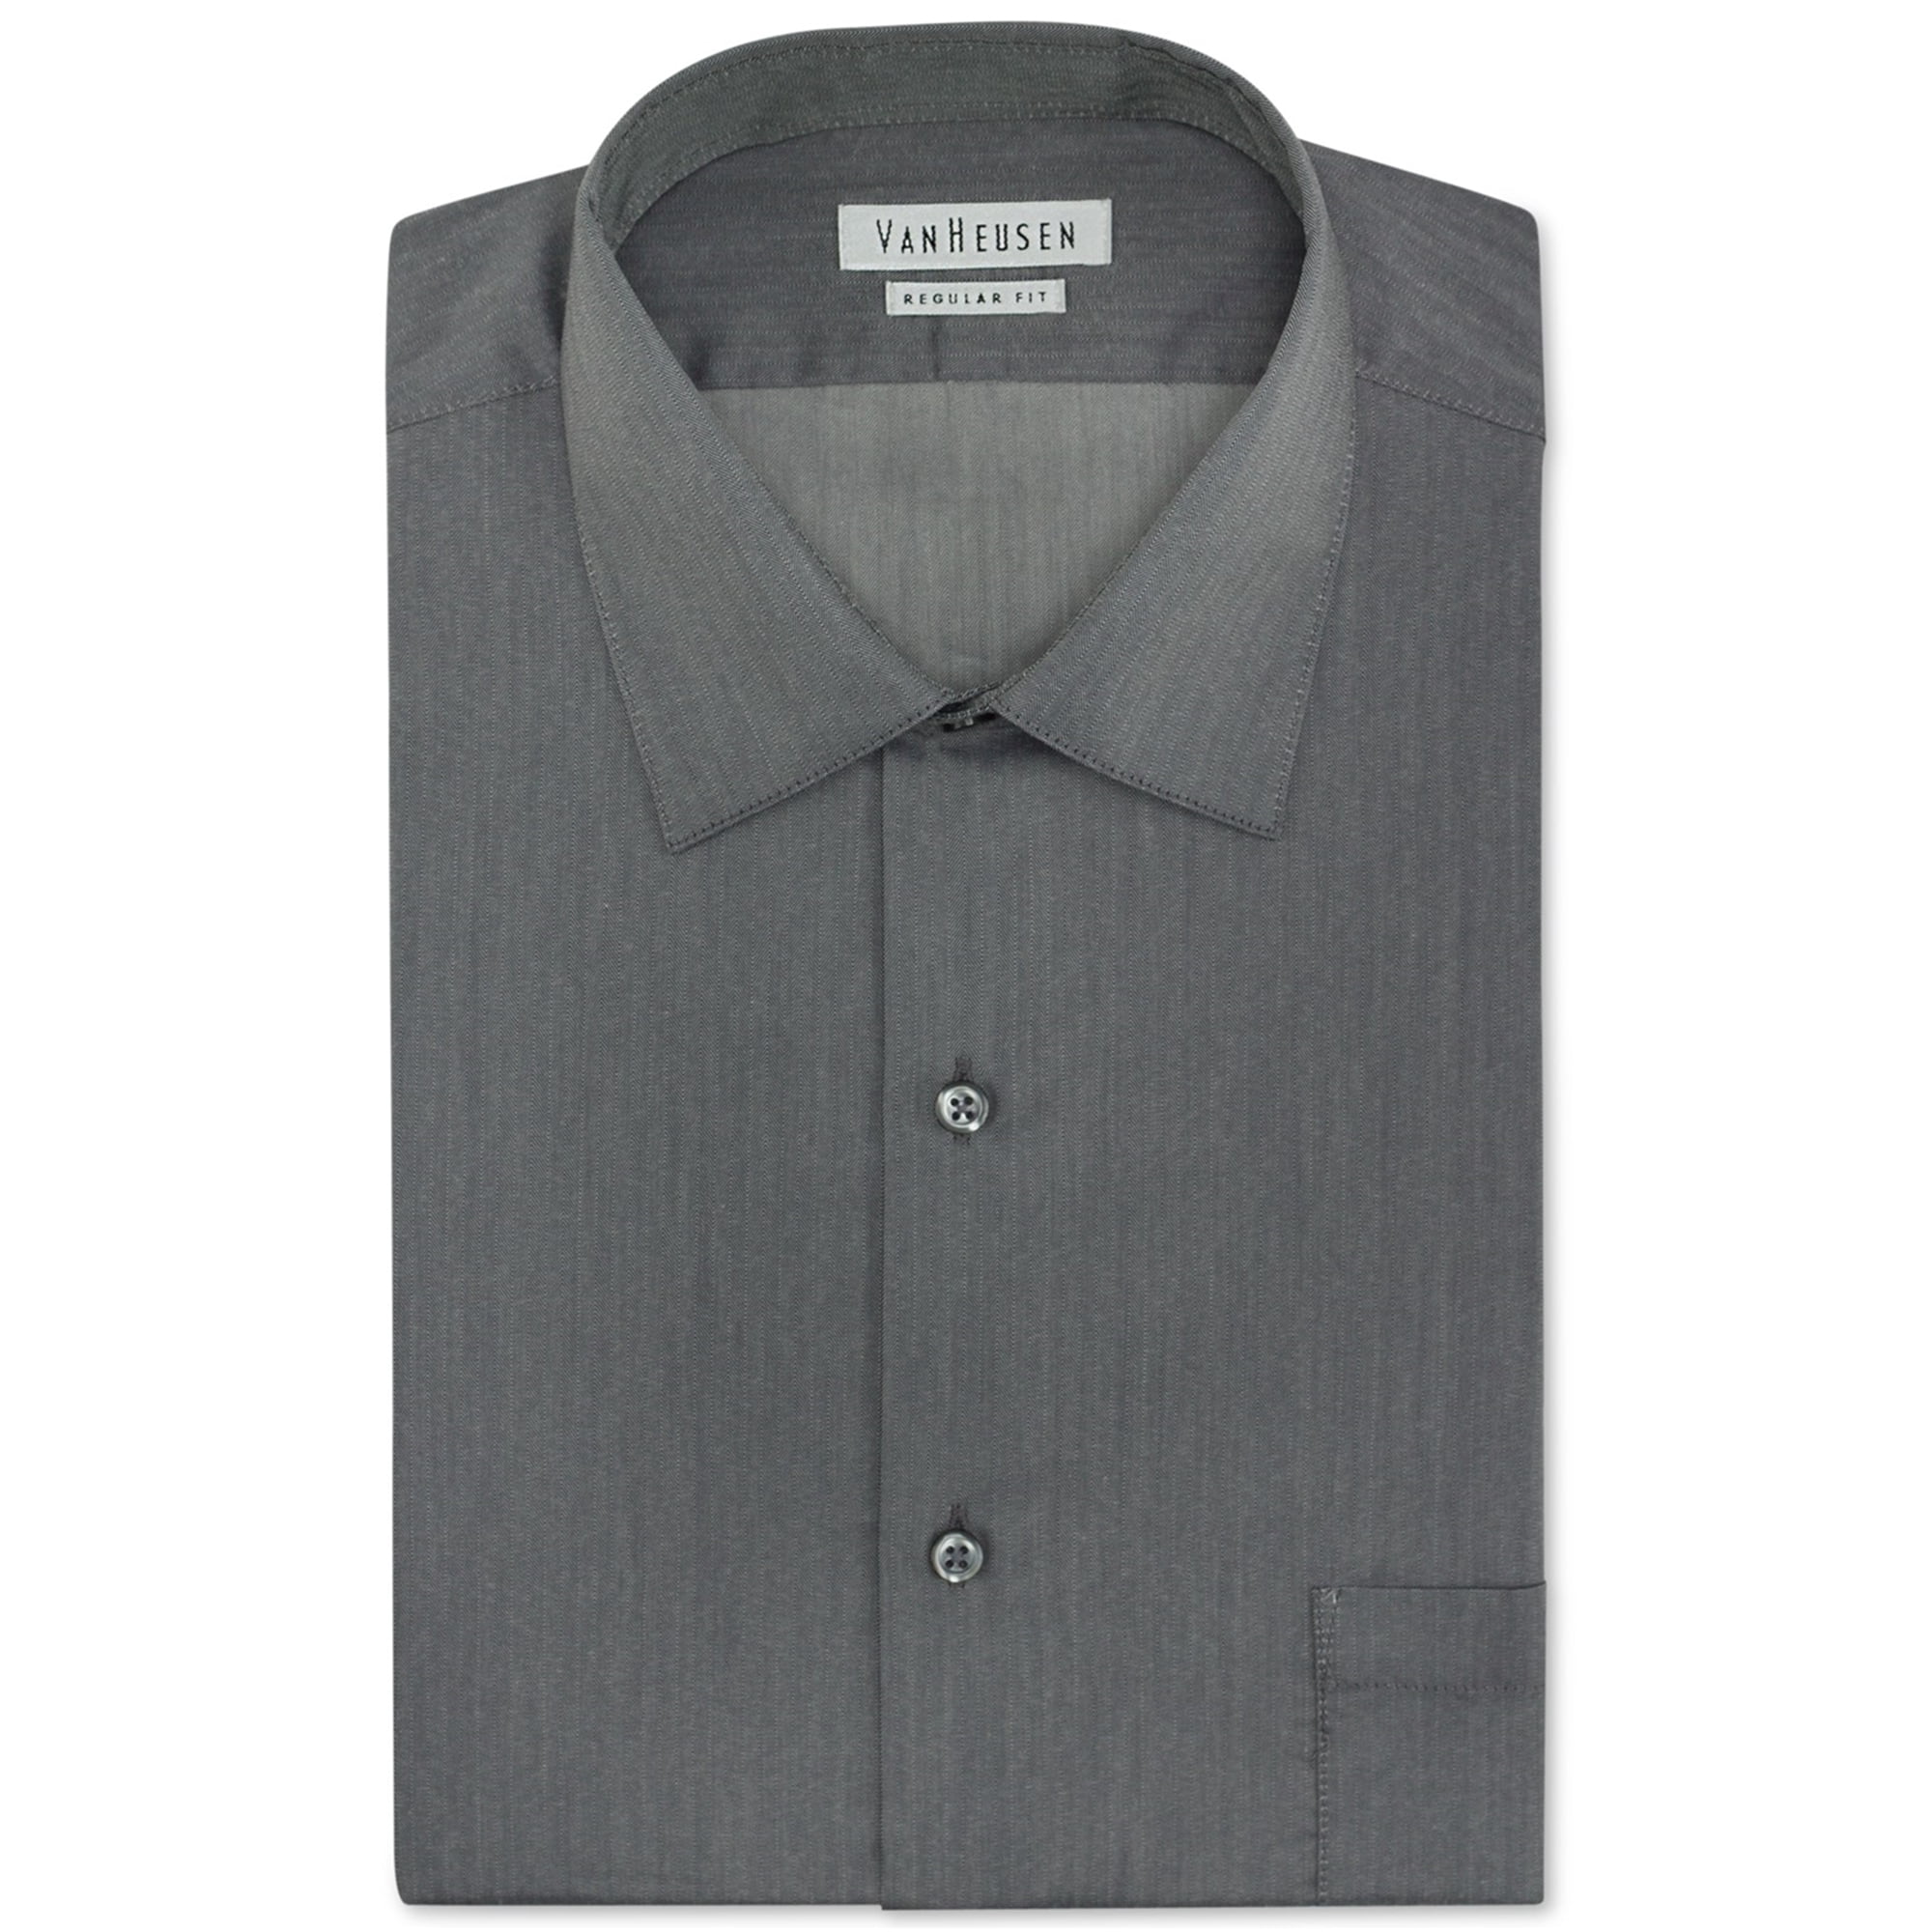 Van Heusen - Van Heusen Mens Wrinkle Free Button Up Dress Shirt ...